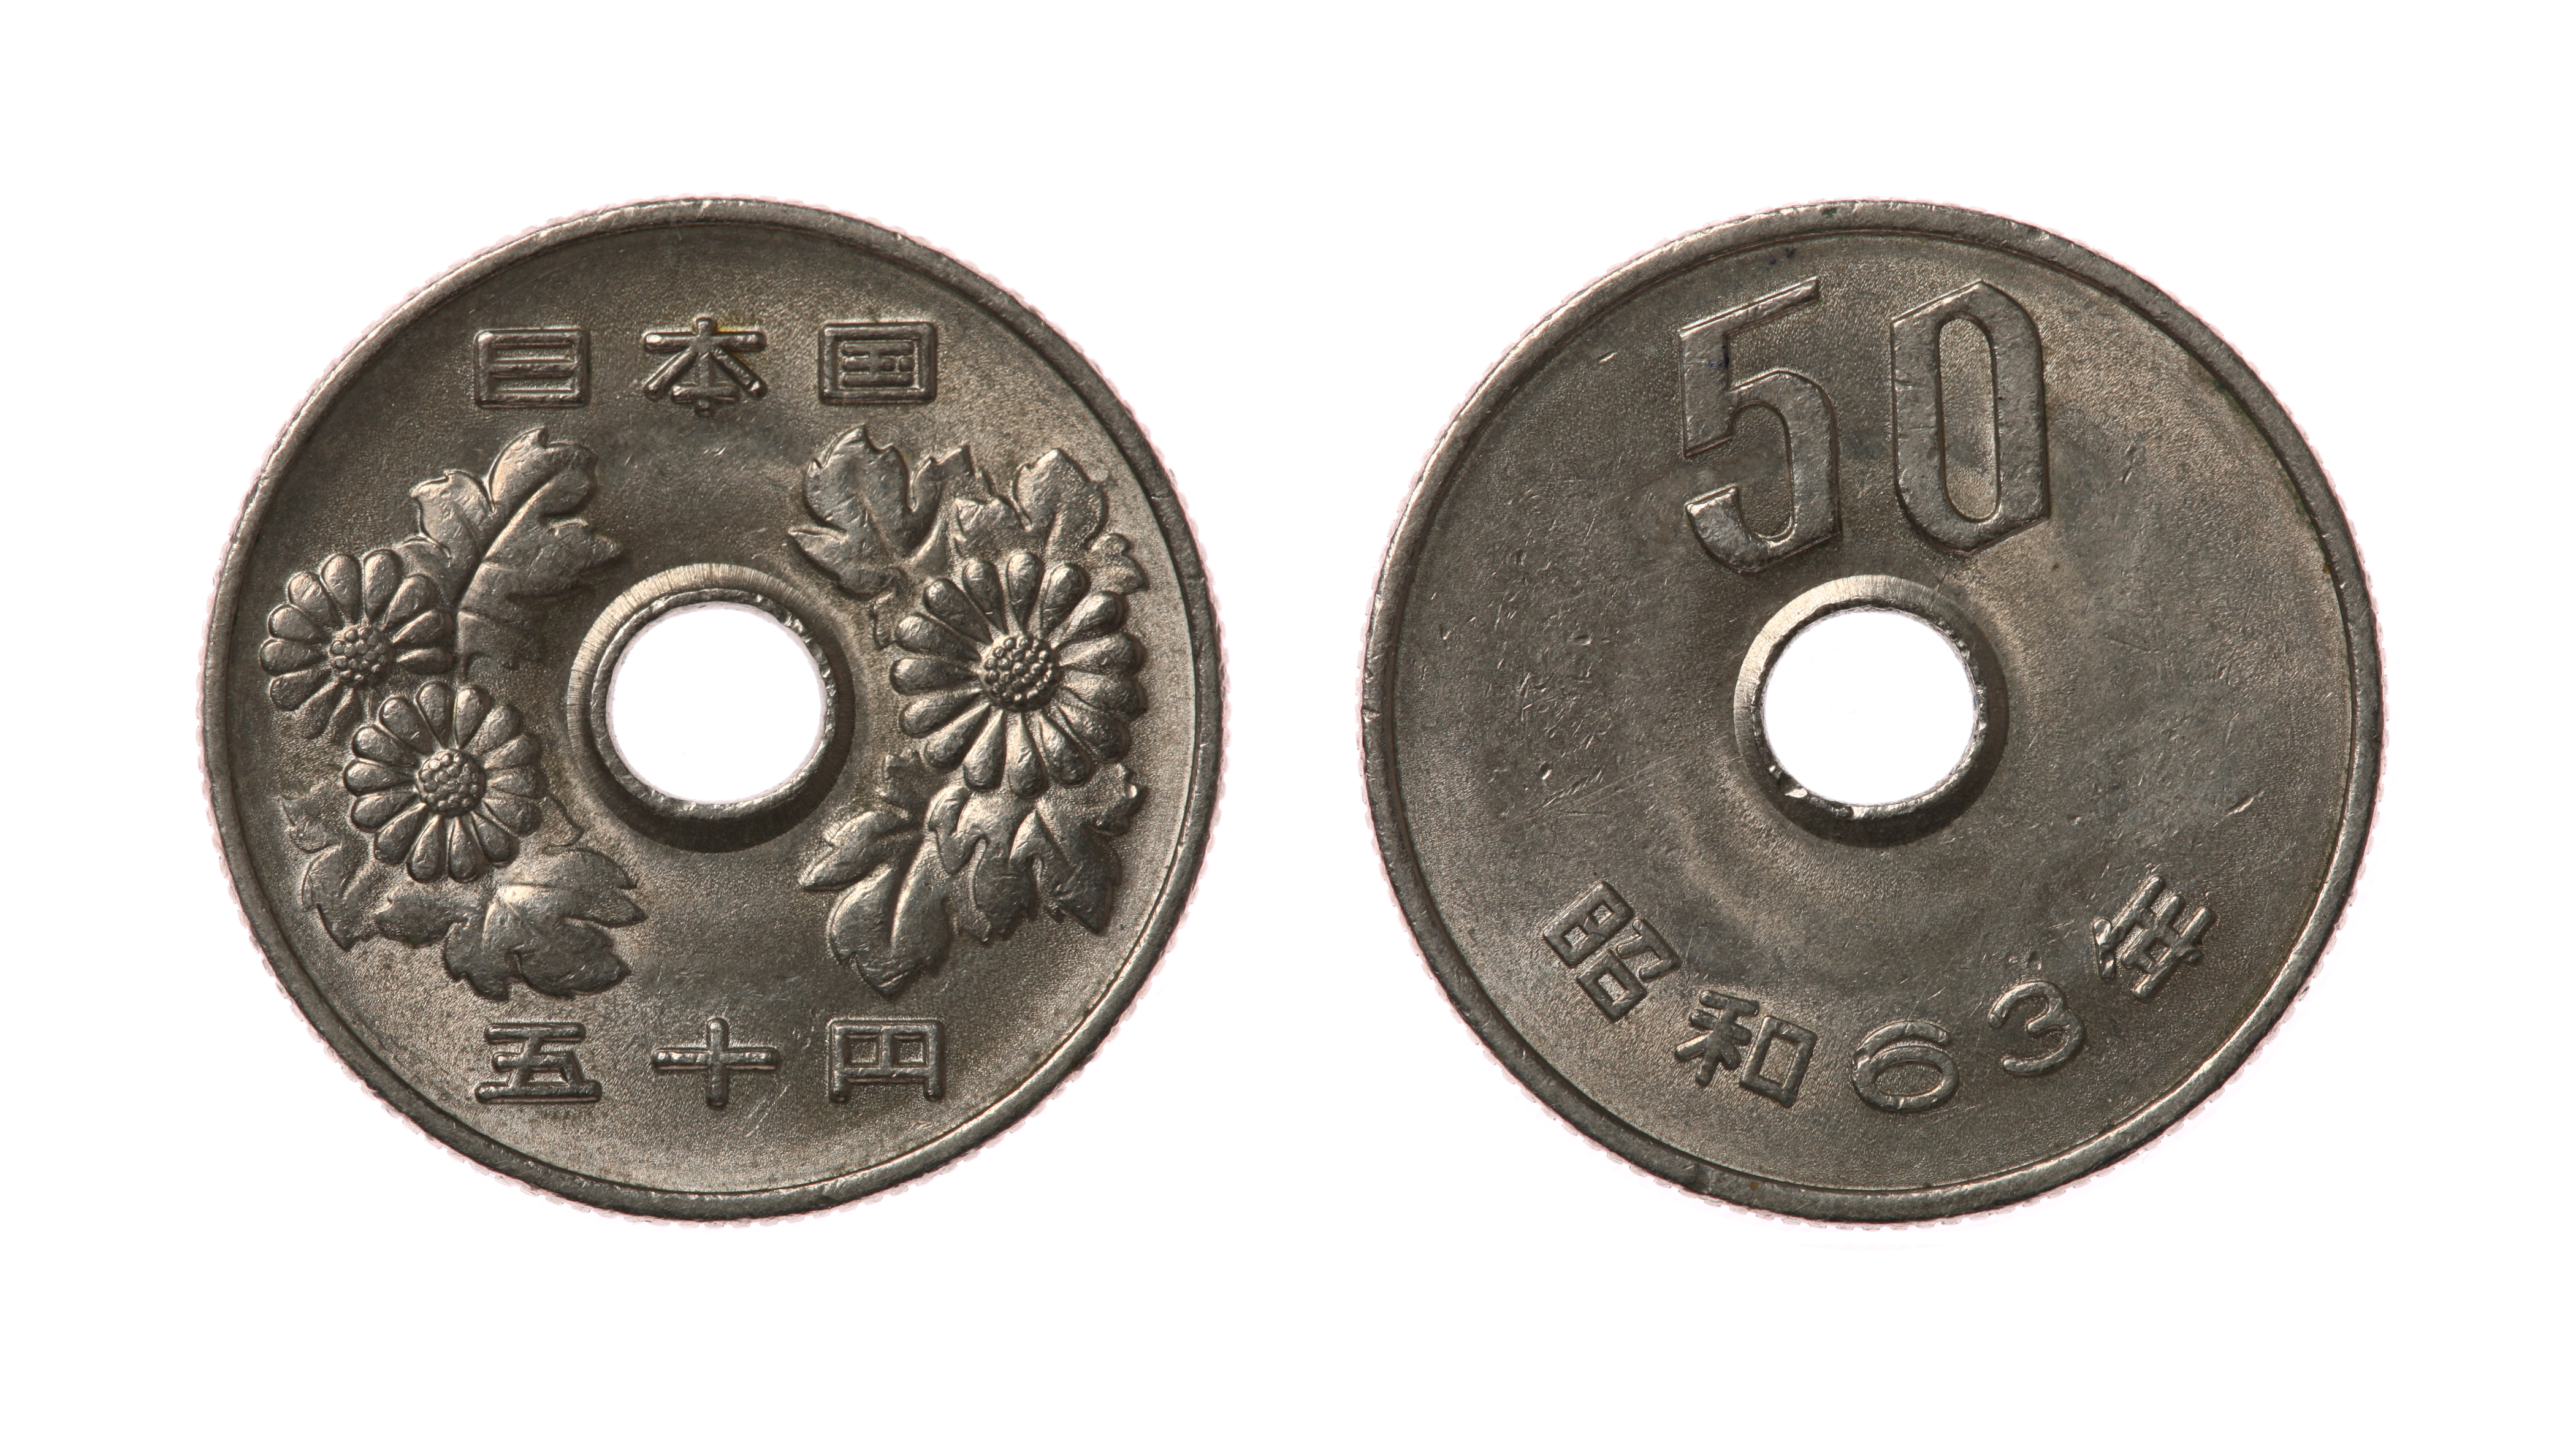 Японская Монетка на прозрачном фоне